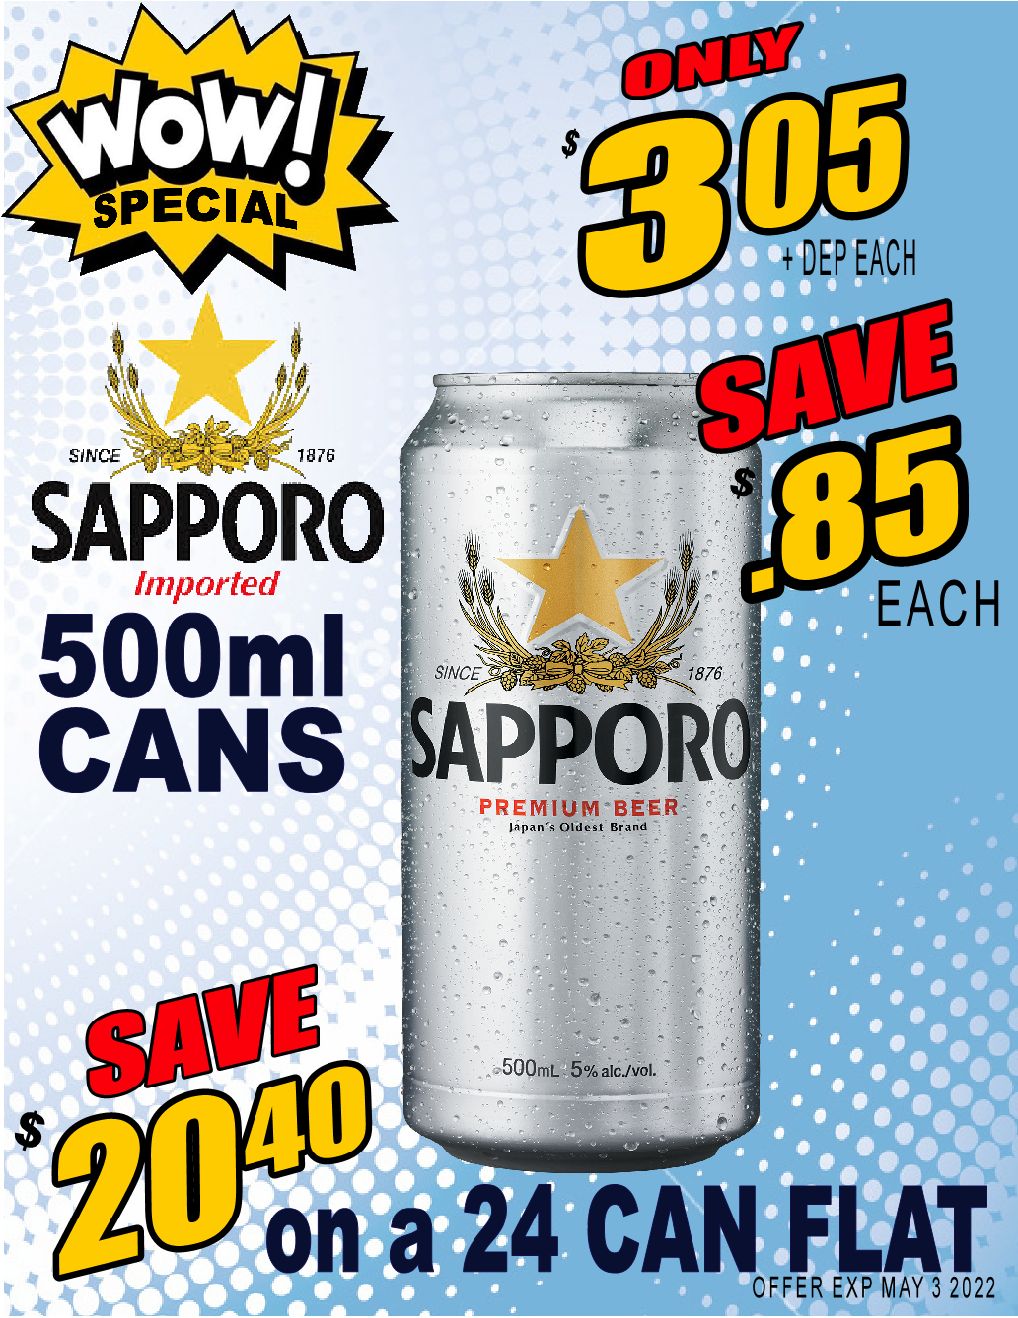 Sapporo - 500ml - Save $0.85